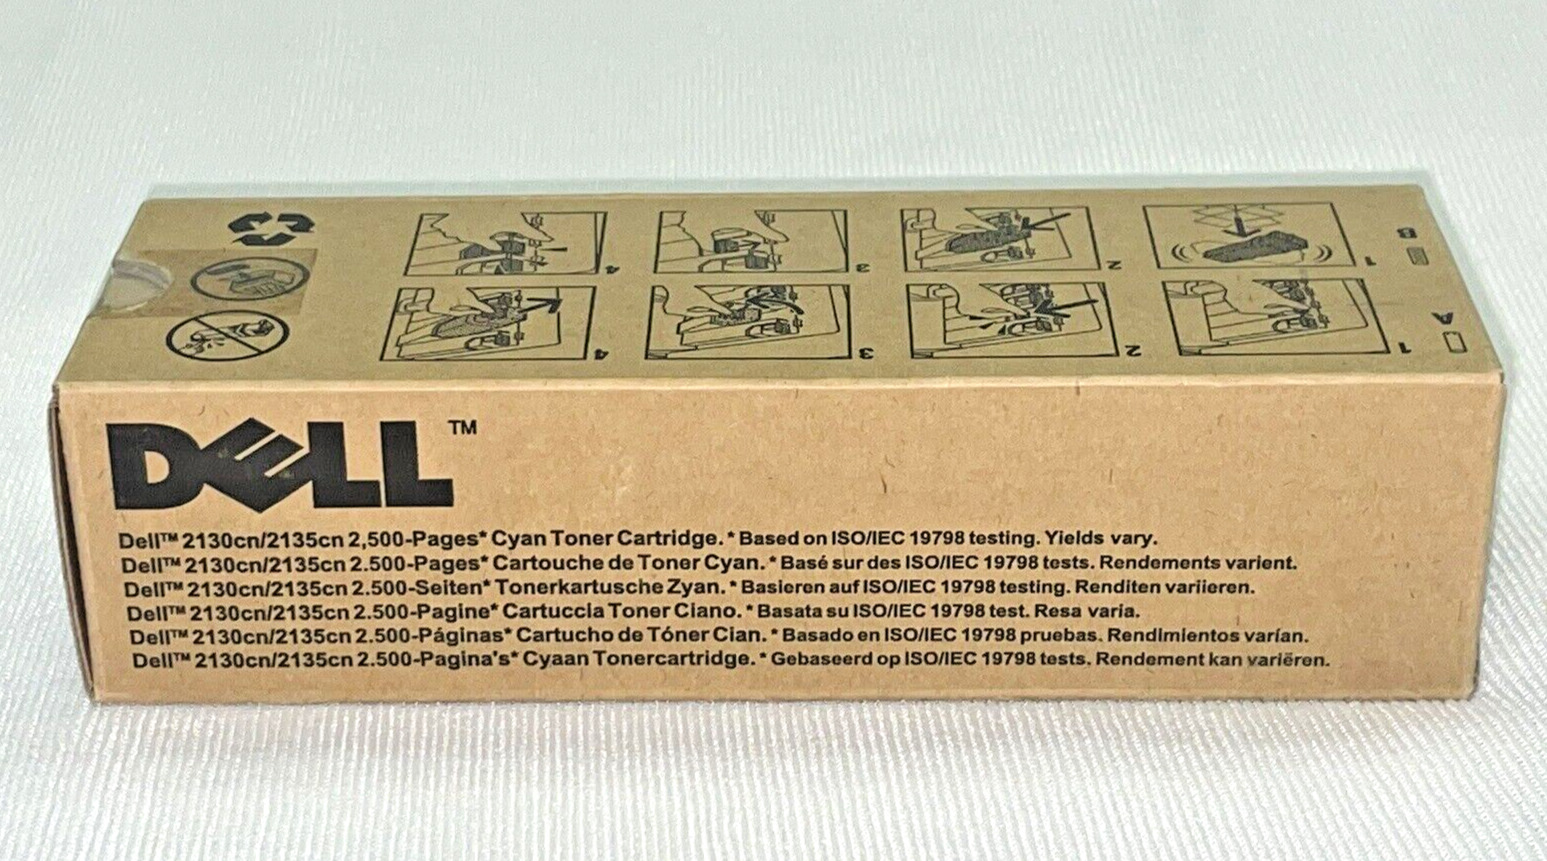 Dell FM065 Toner Cartridge for 2130cn/2135cn Laser Printers  CYAN NEW SEALED BOX